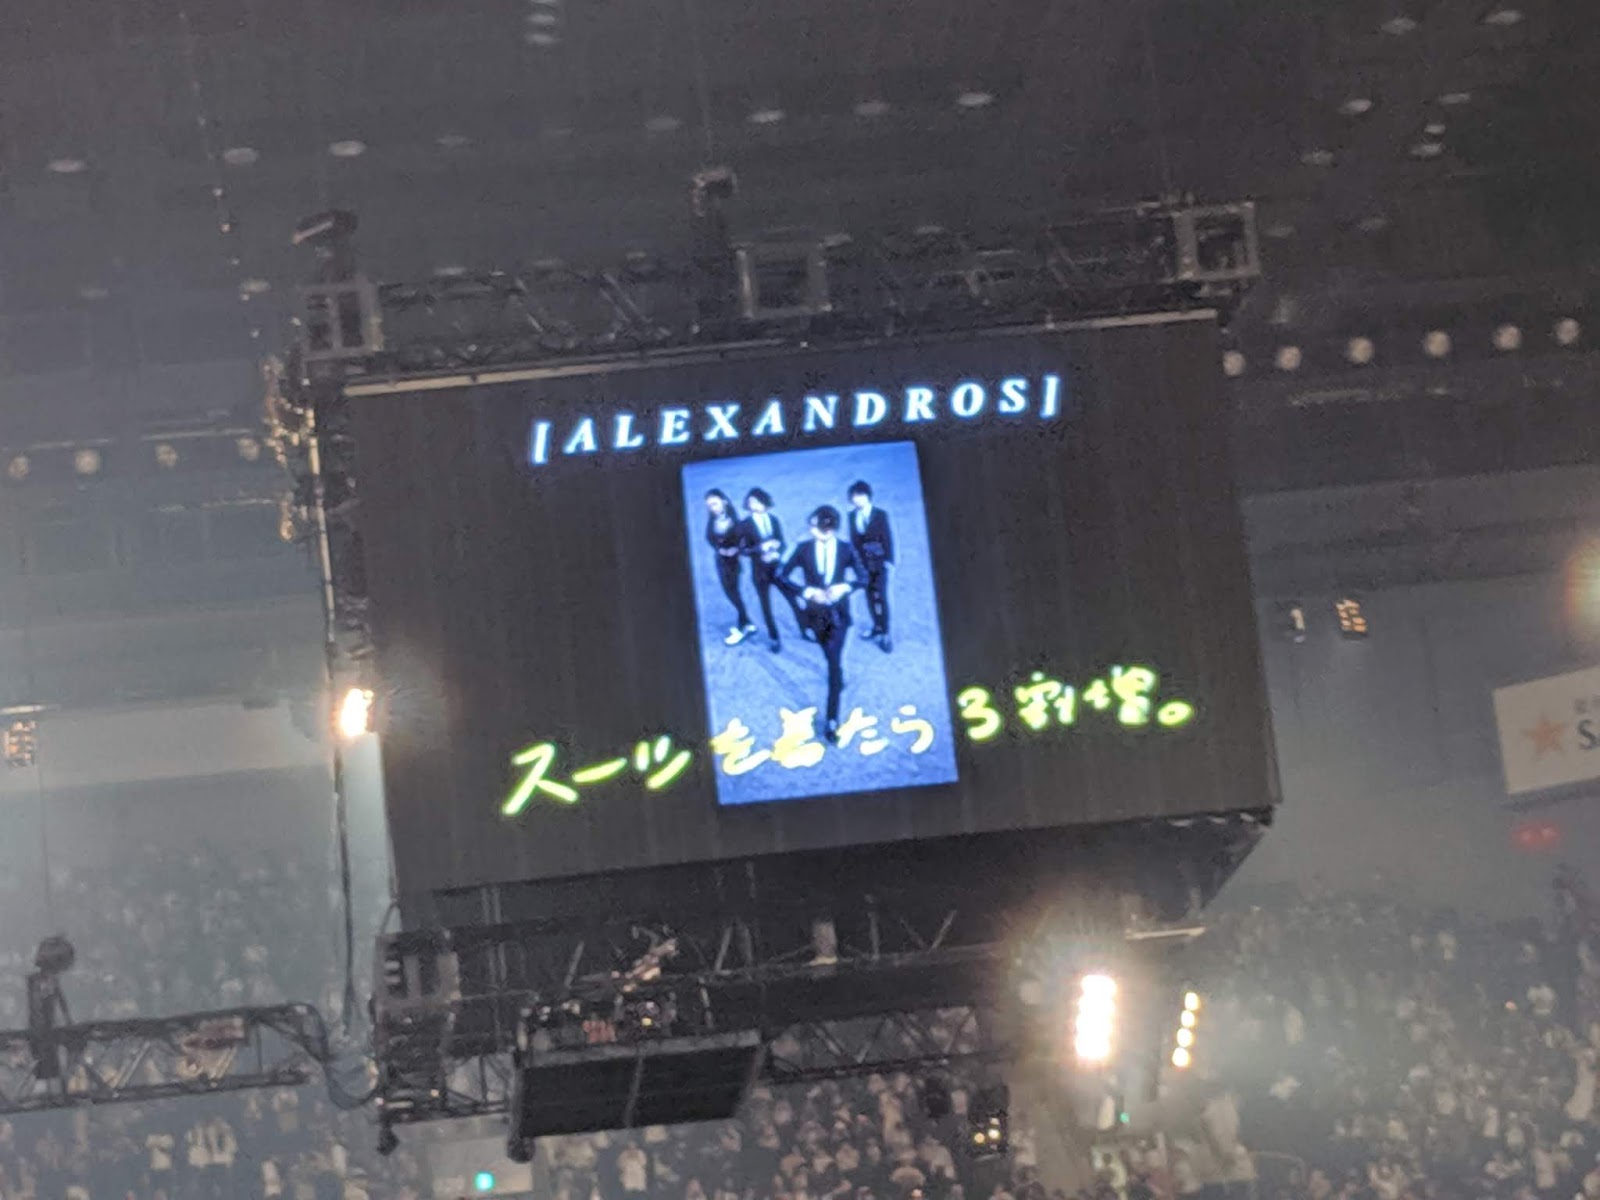 Alexandros Sleepless In Japan Tour さいたまスーパーアリーナ 言葉にならない言葉